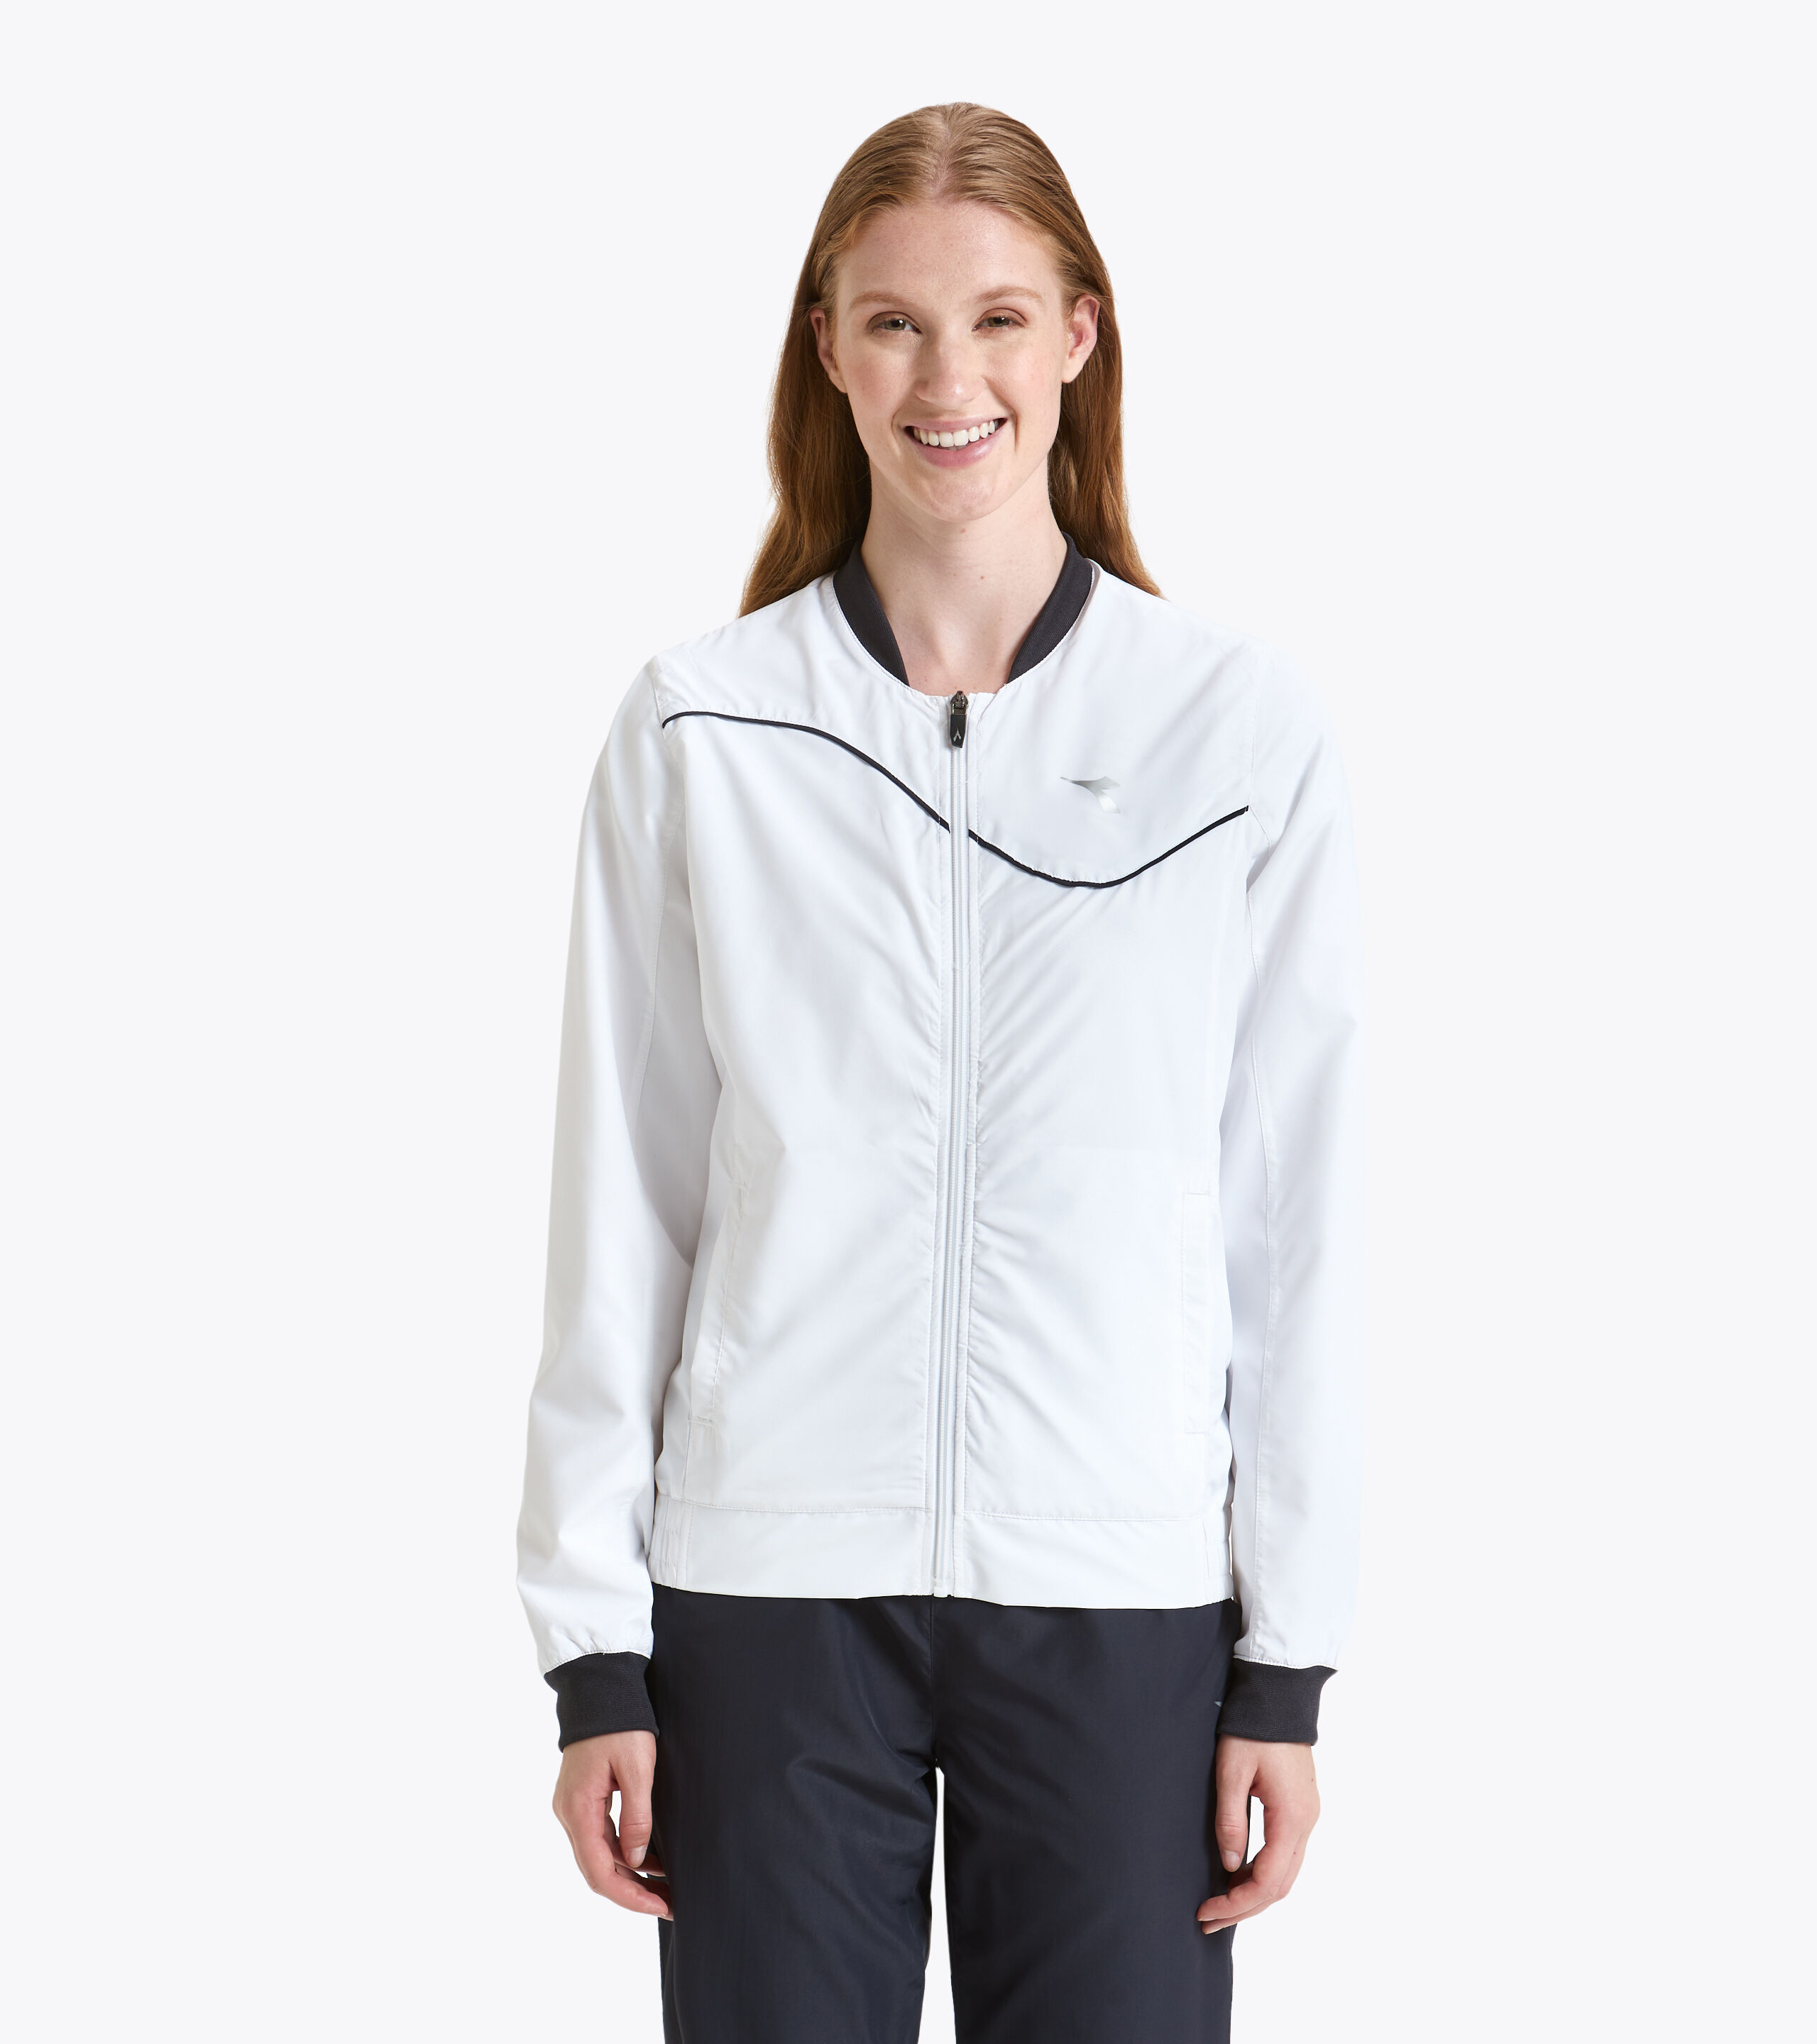 L. JACKET COURT Tennis jacket - Women - Diadora Online Store US